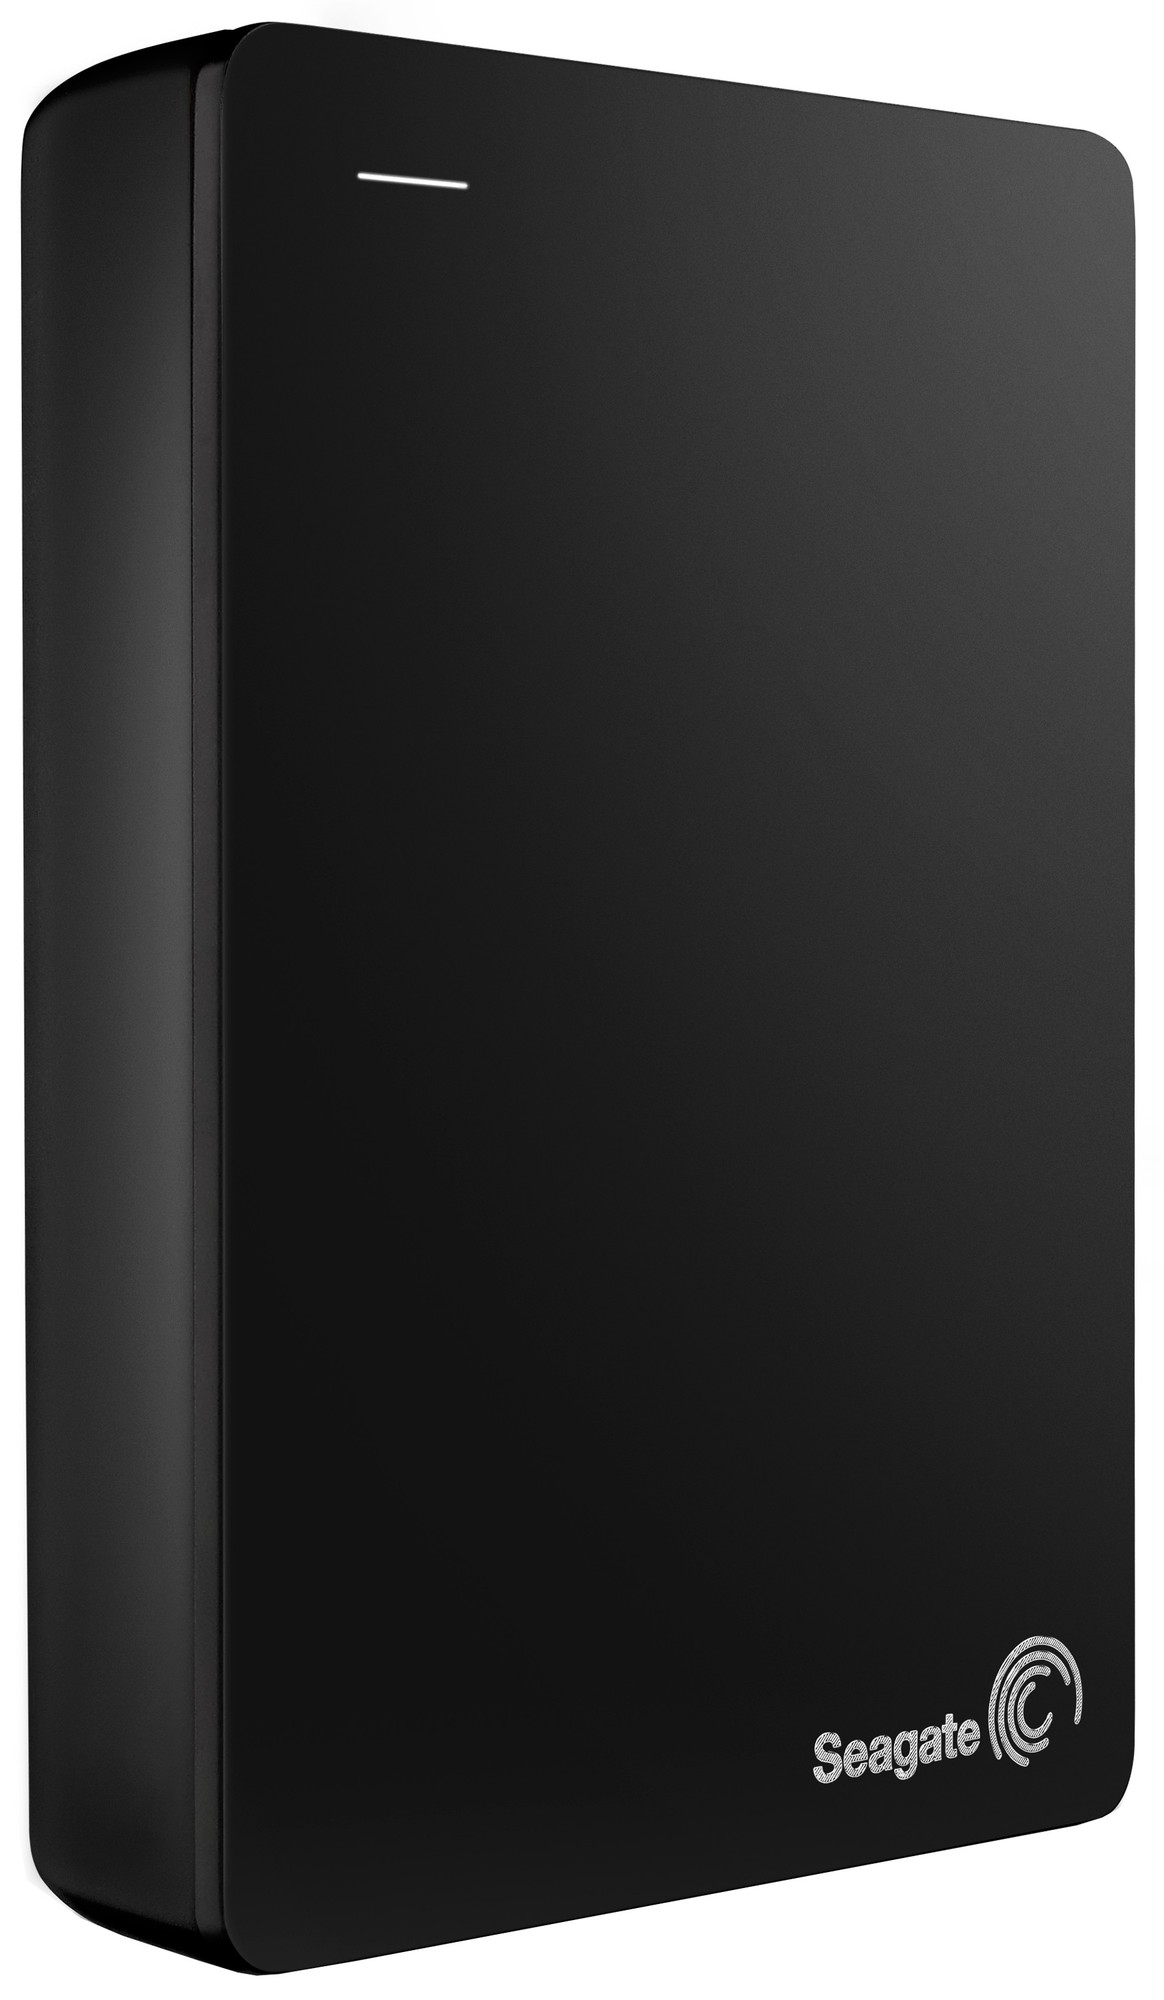 Seagate Backup Plus 4 TB ekstern harddisk | Elgiganten